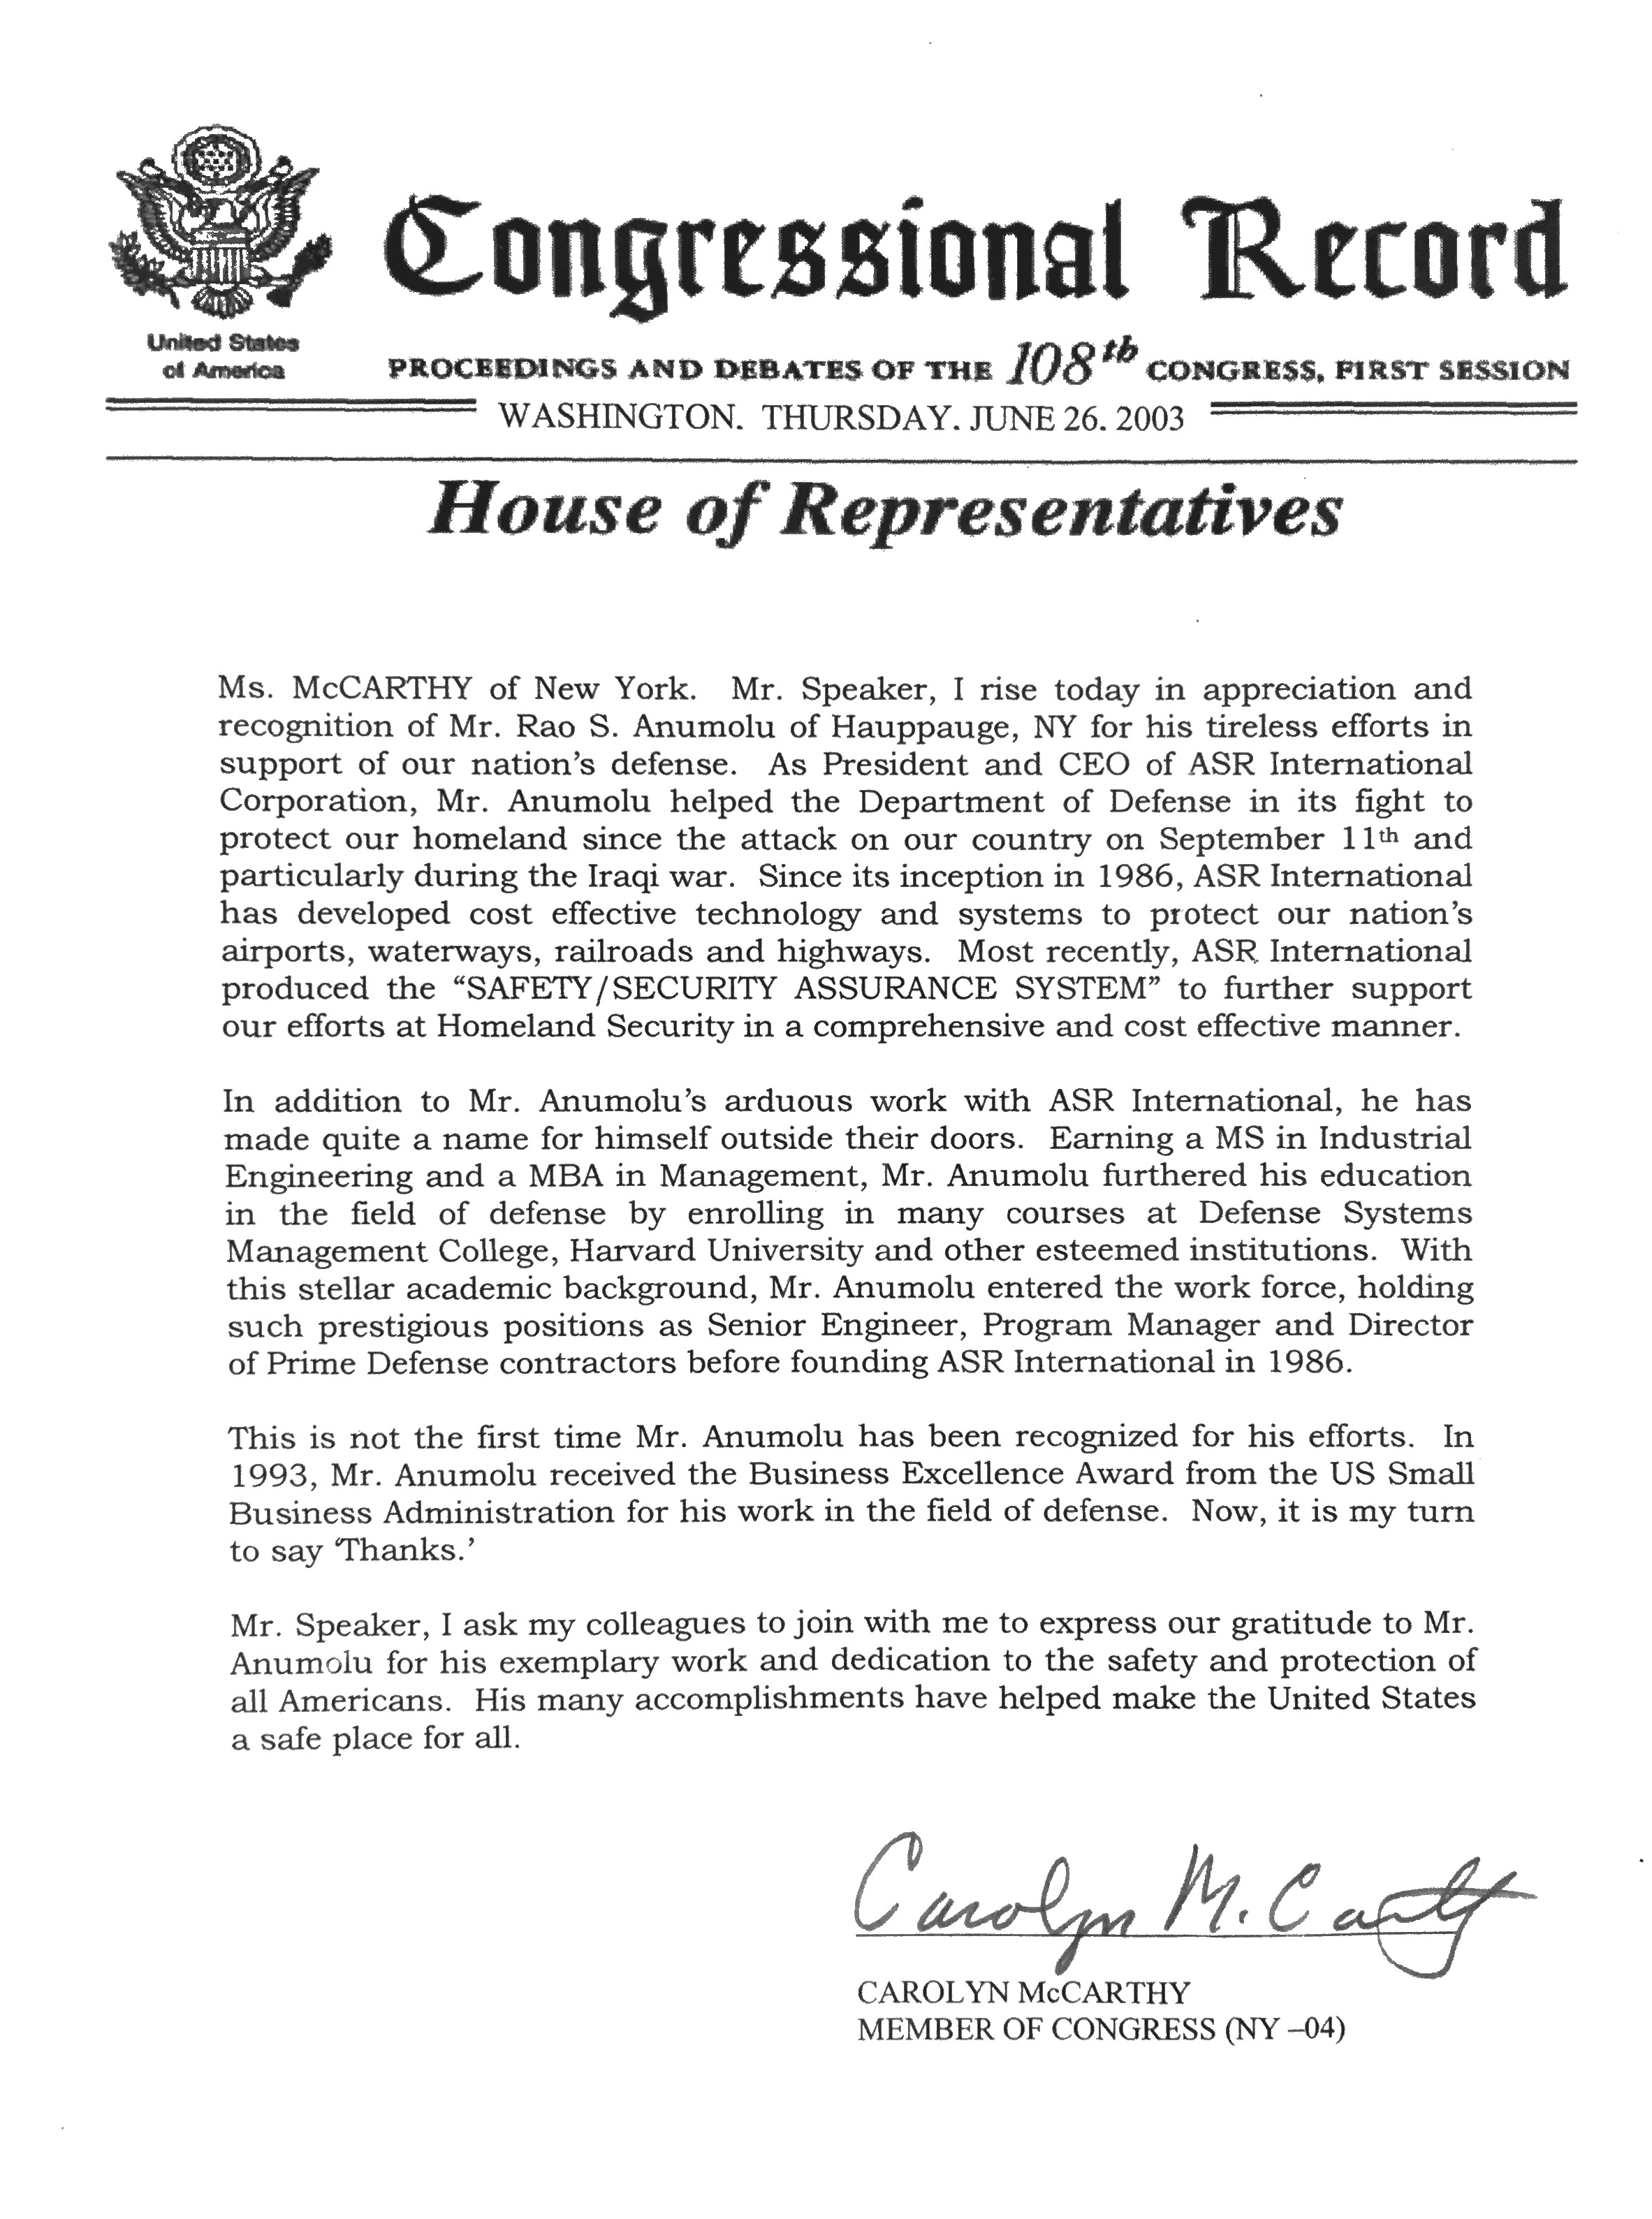 ASR Congressional Citation